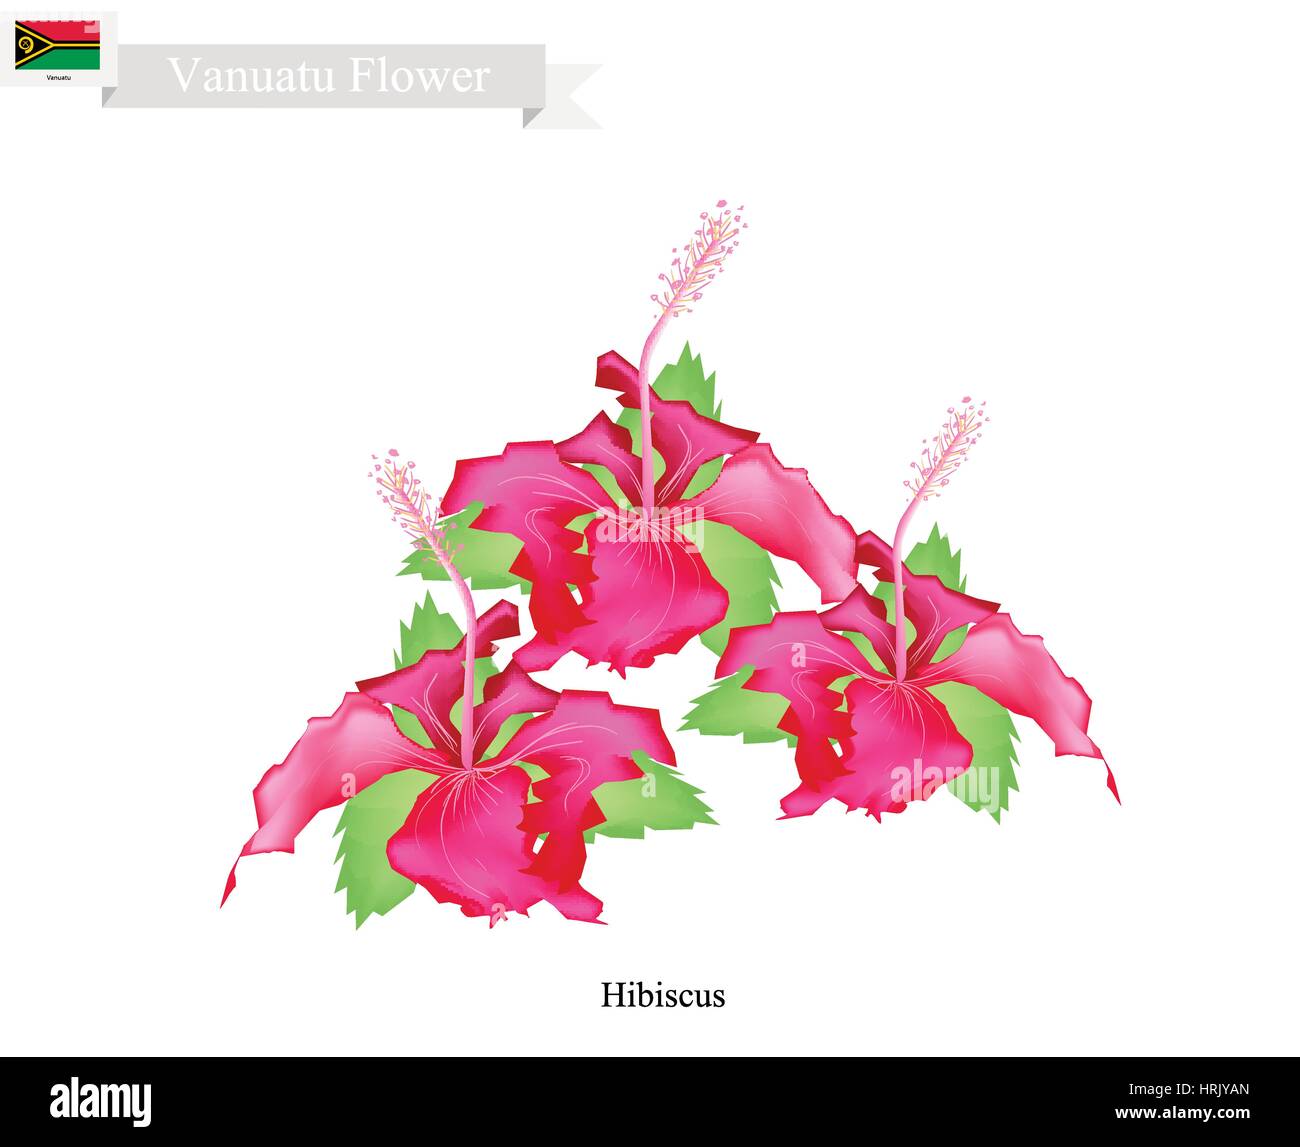 Vanuatu Flower, Illustration of Hibiscus Flowers. The National Flower of Vanuatu. Stock Vector